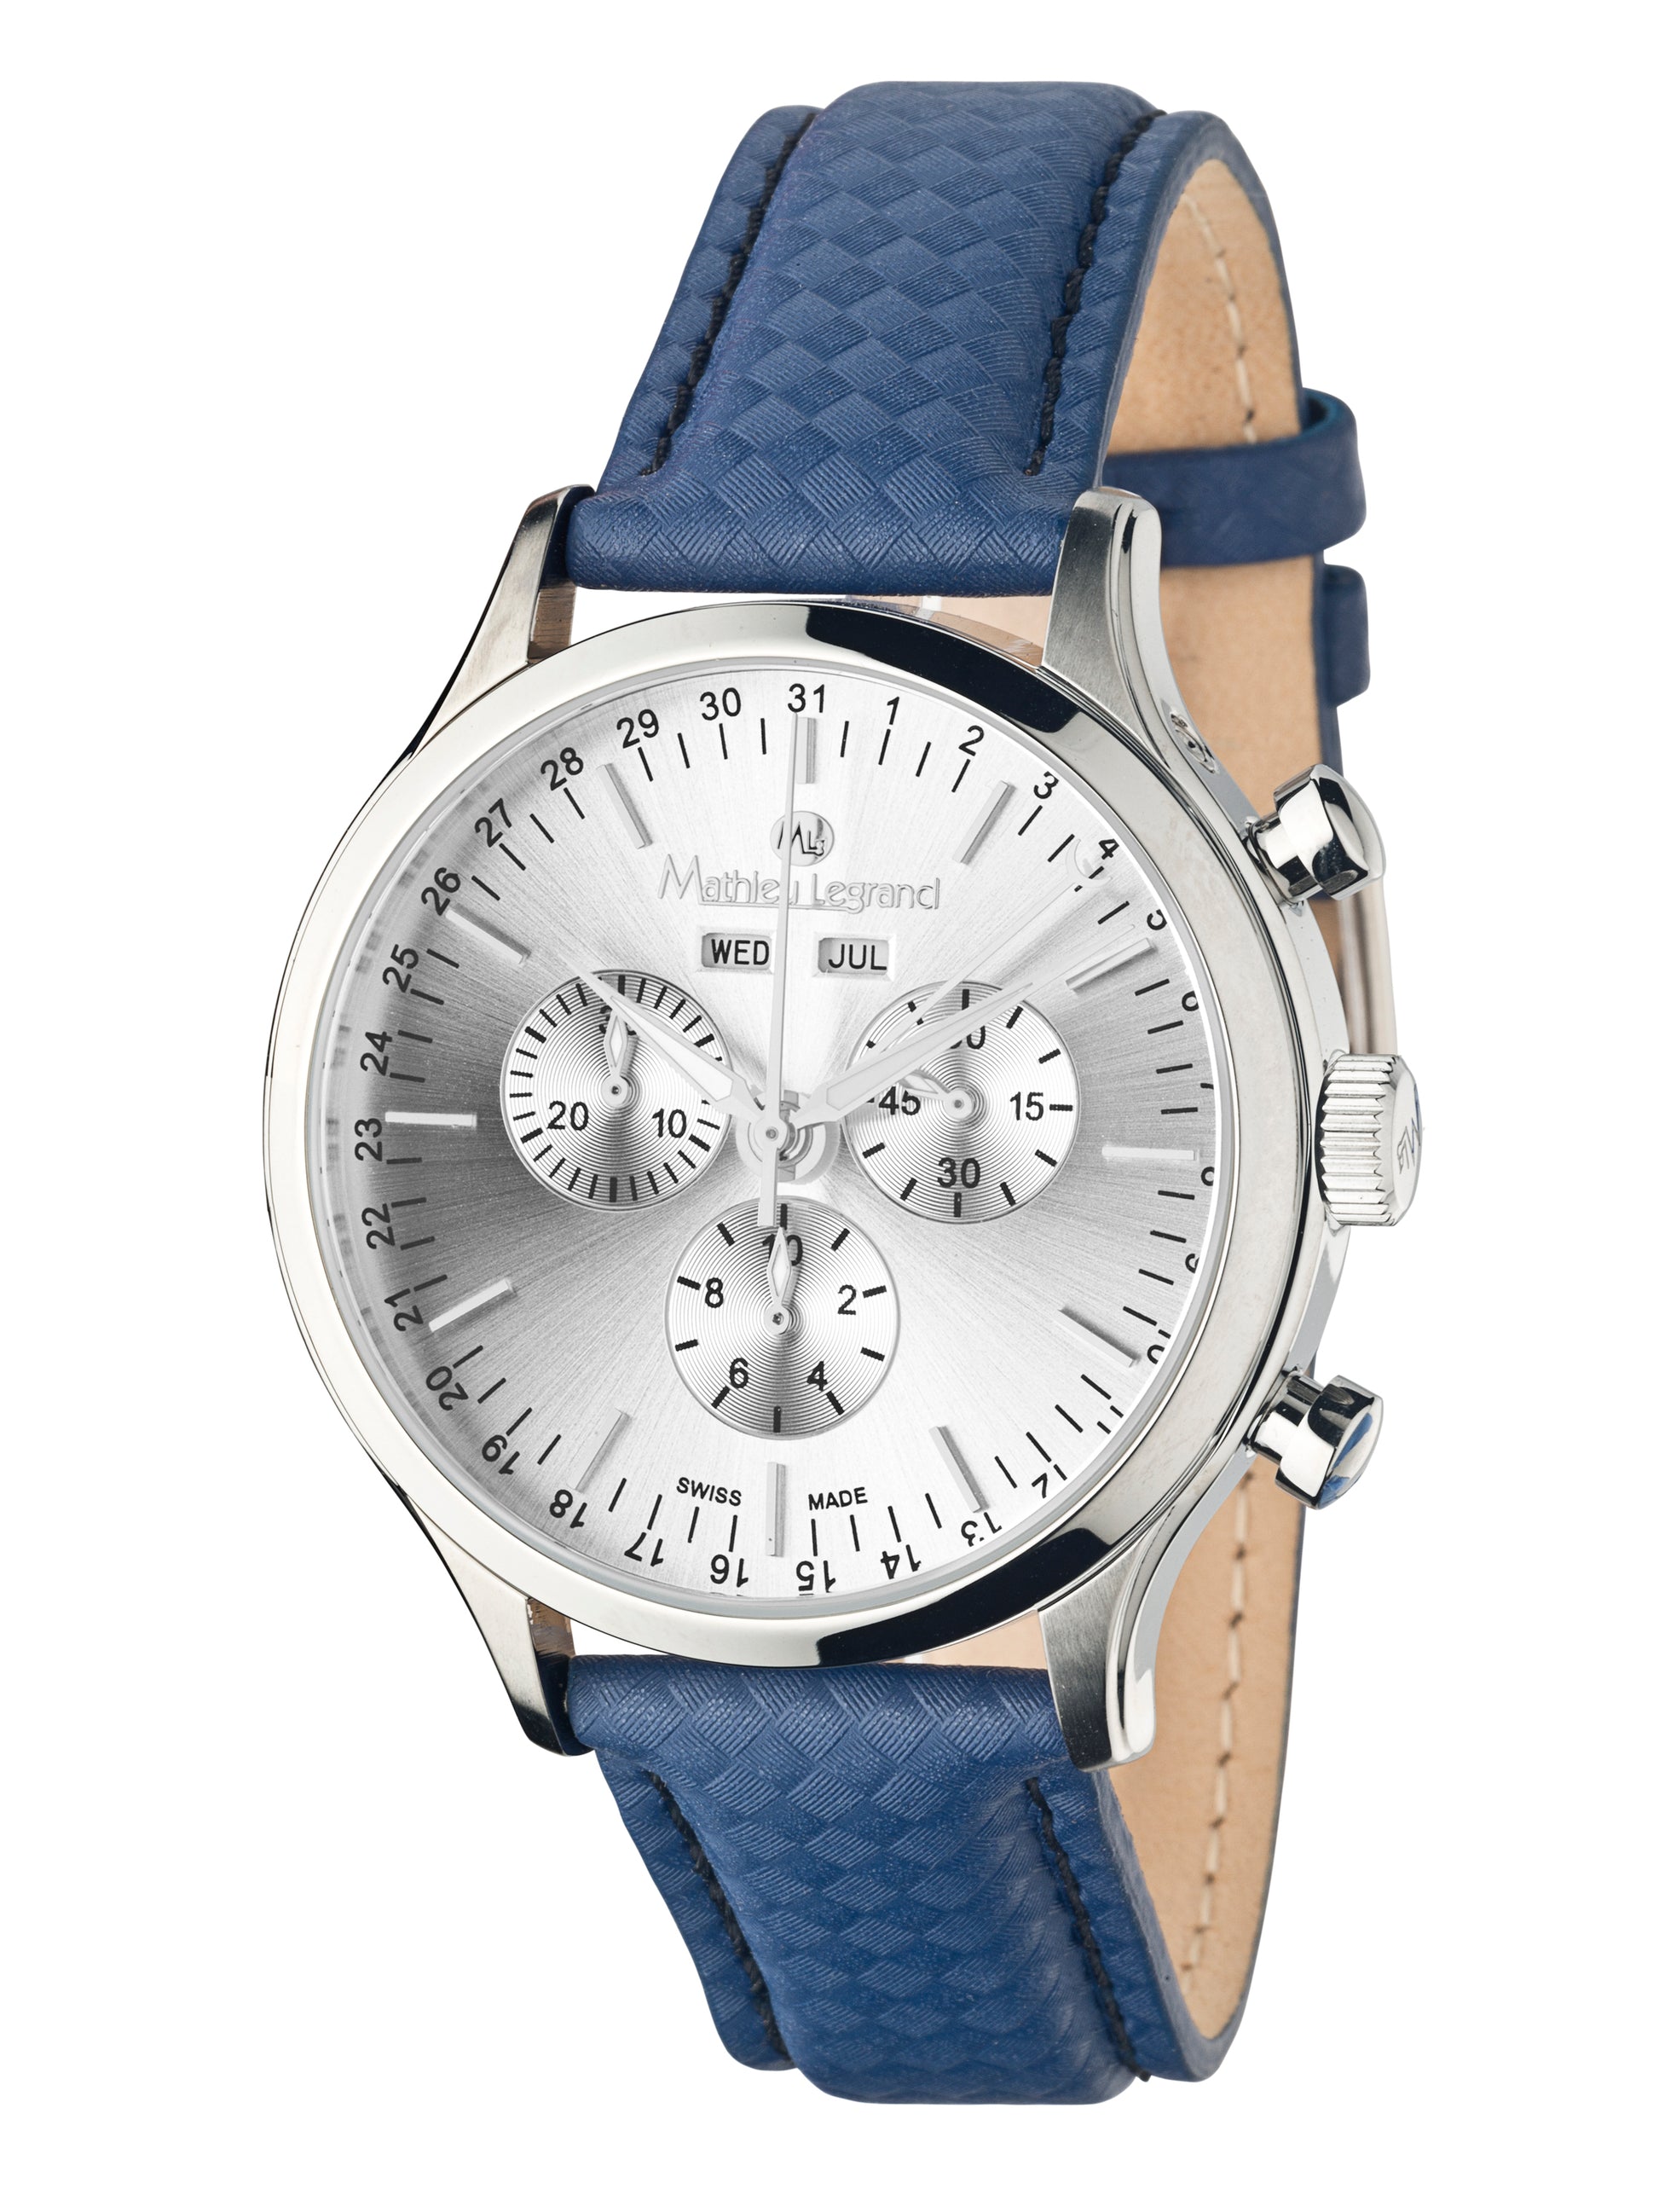 Automatic watches — Tournante — Mathieu Legrand — steel silver blue